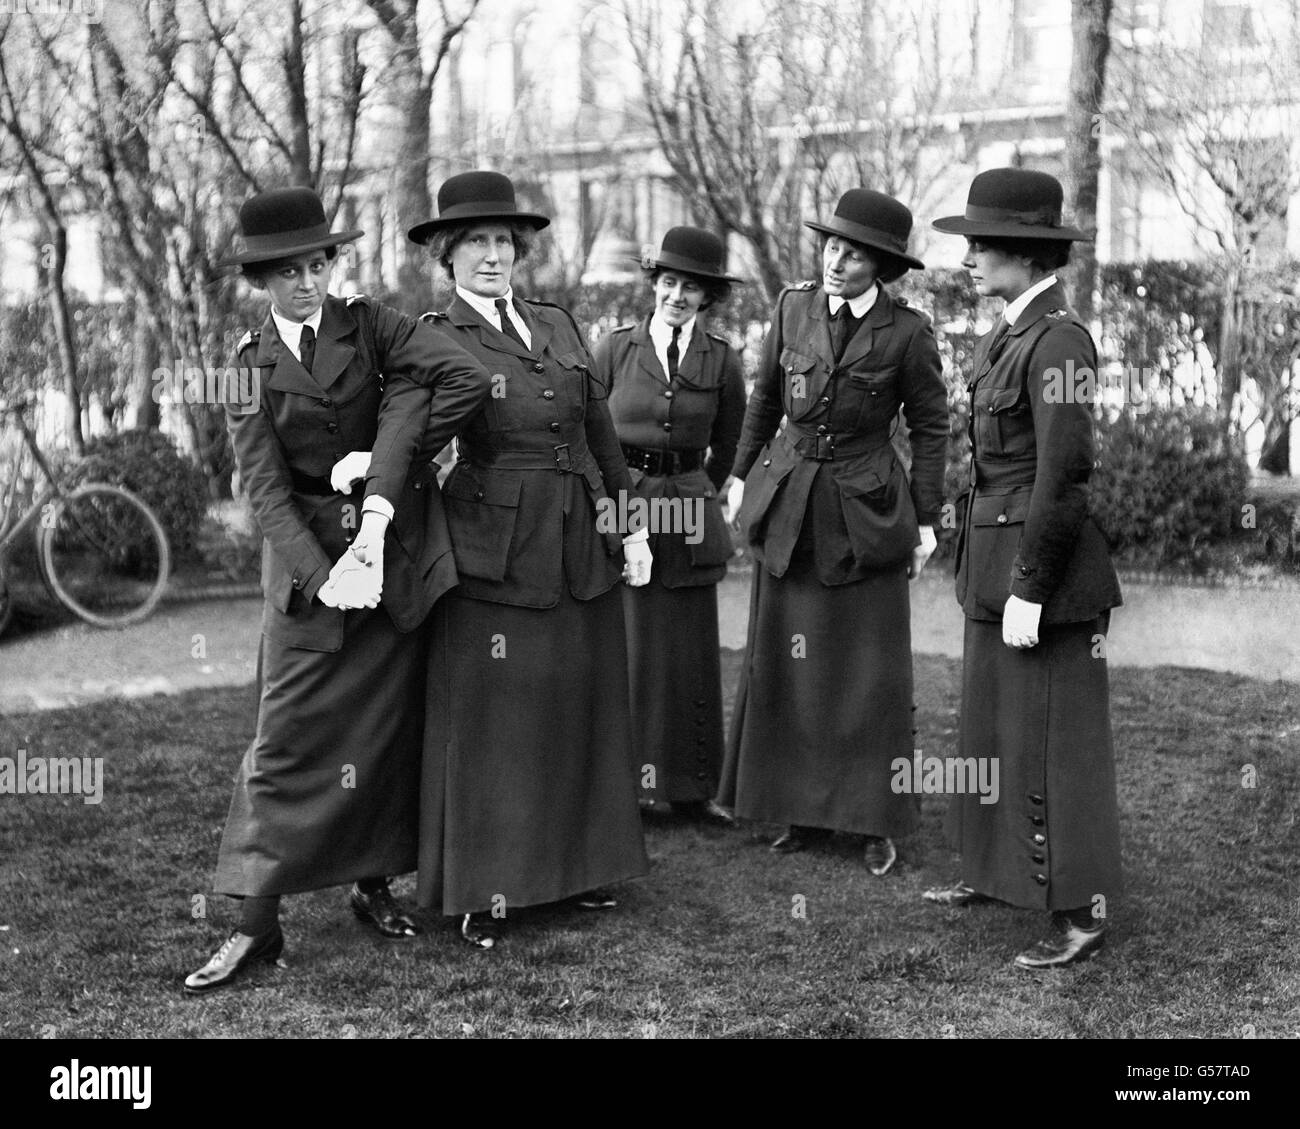 British Law and Order - Law Enforcement - Policewomen - Brighton - 1918 Stock Photo